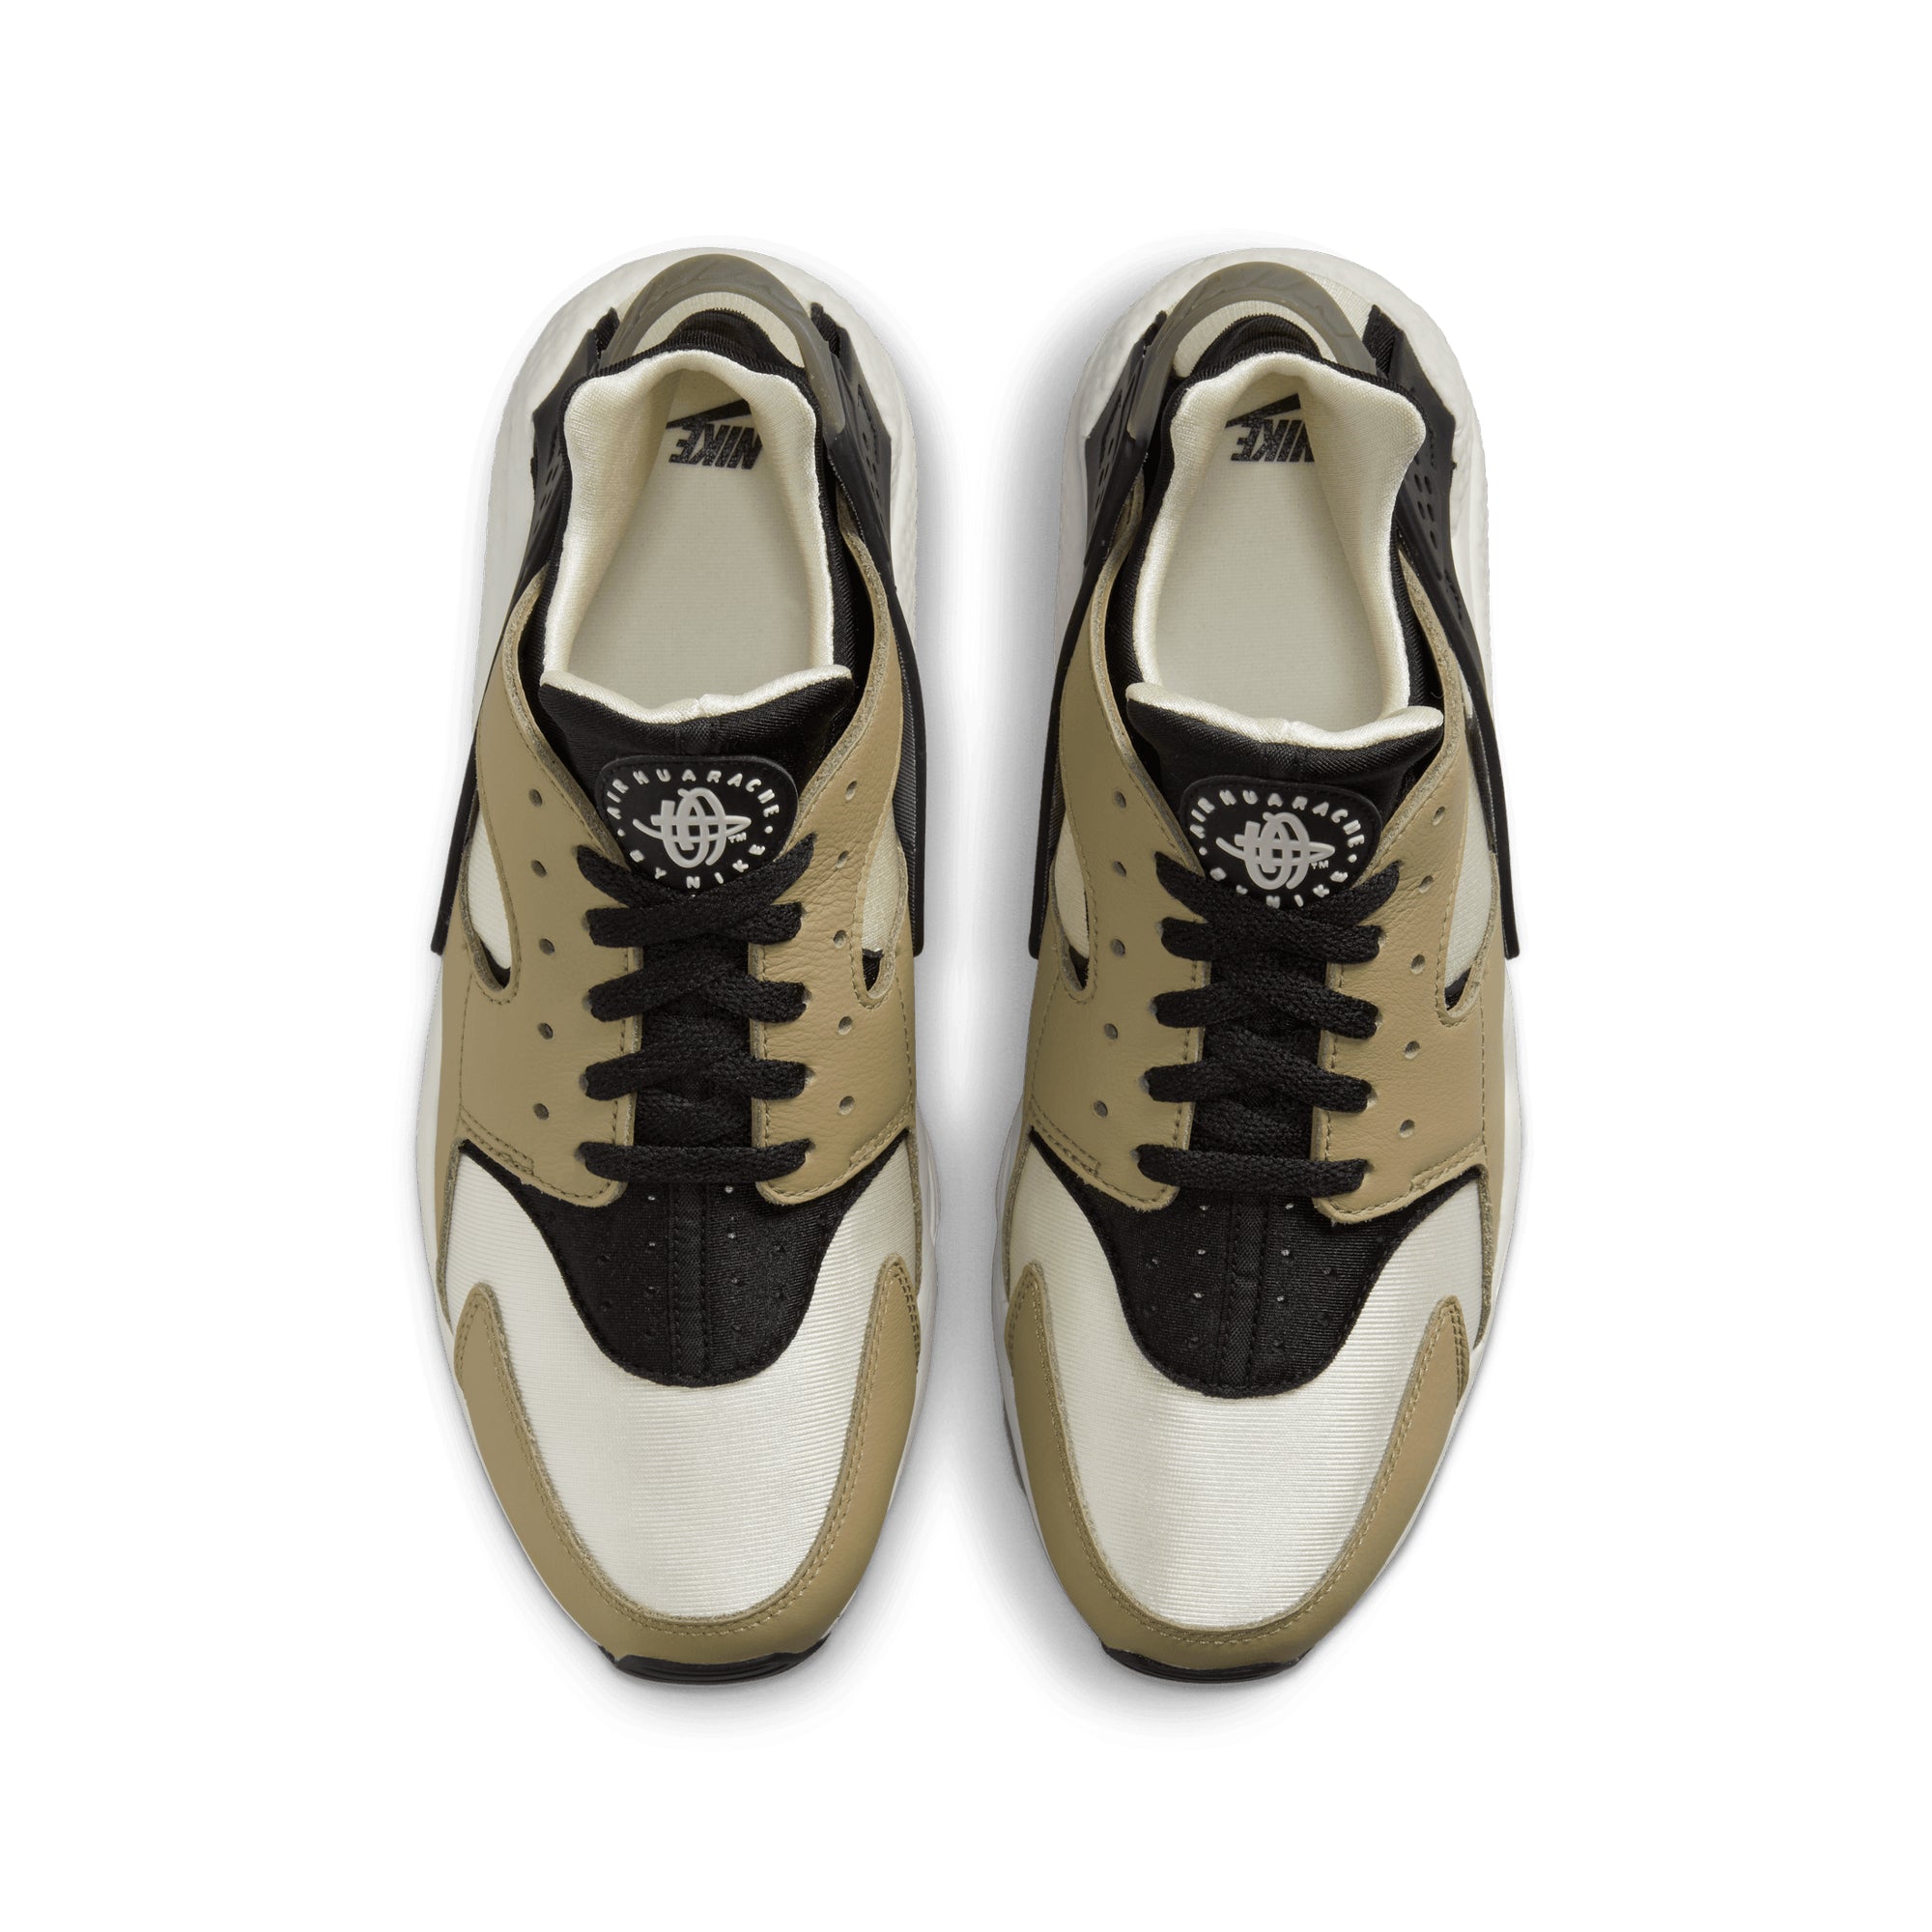 Nike Air Huarache Runner Shoes in Brown for Men